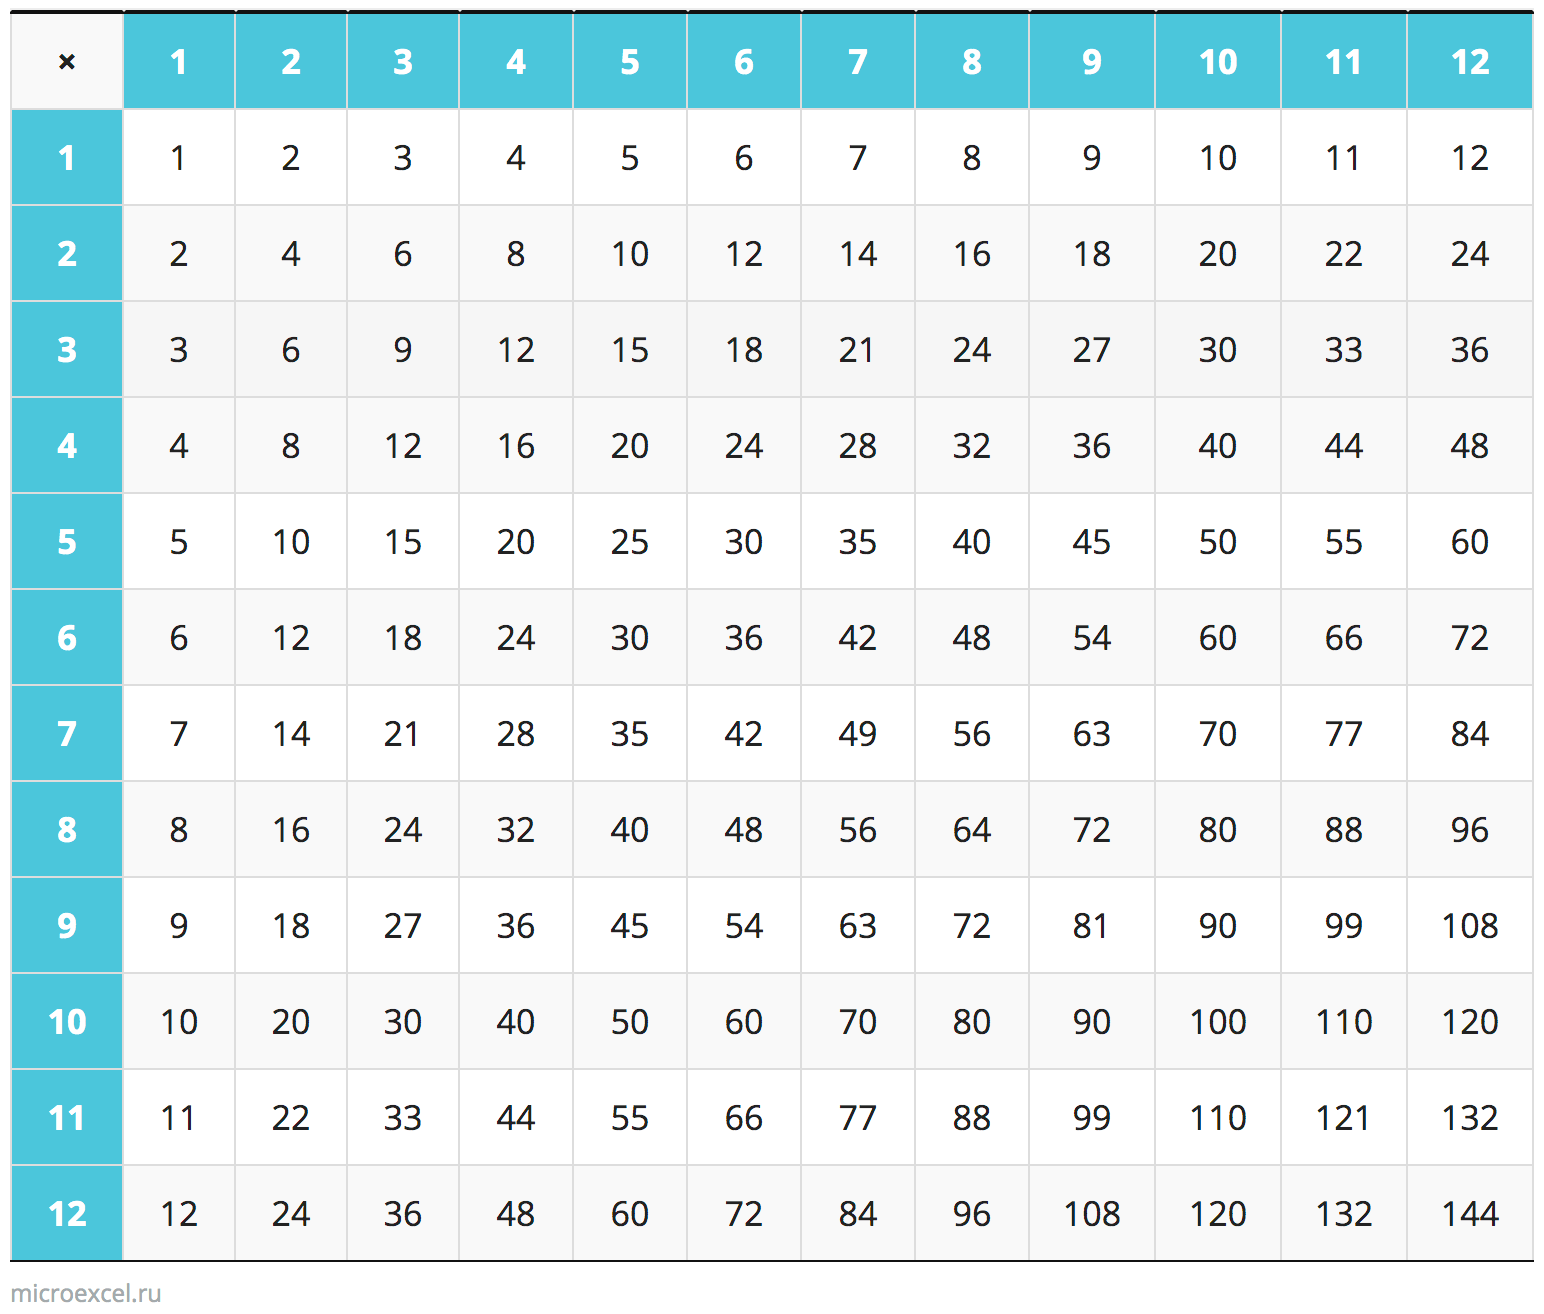 Таблица умножения Пифагора в пределах 20